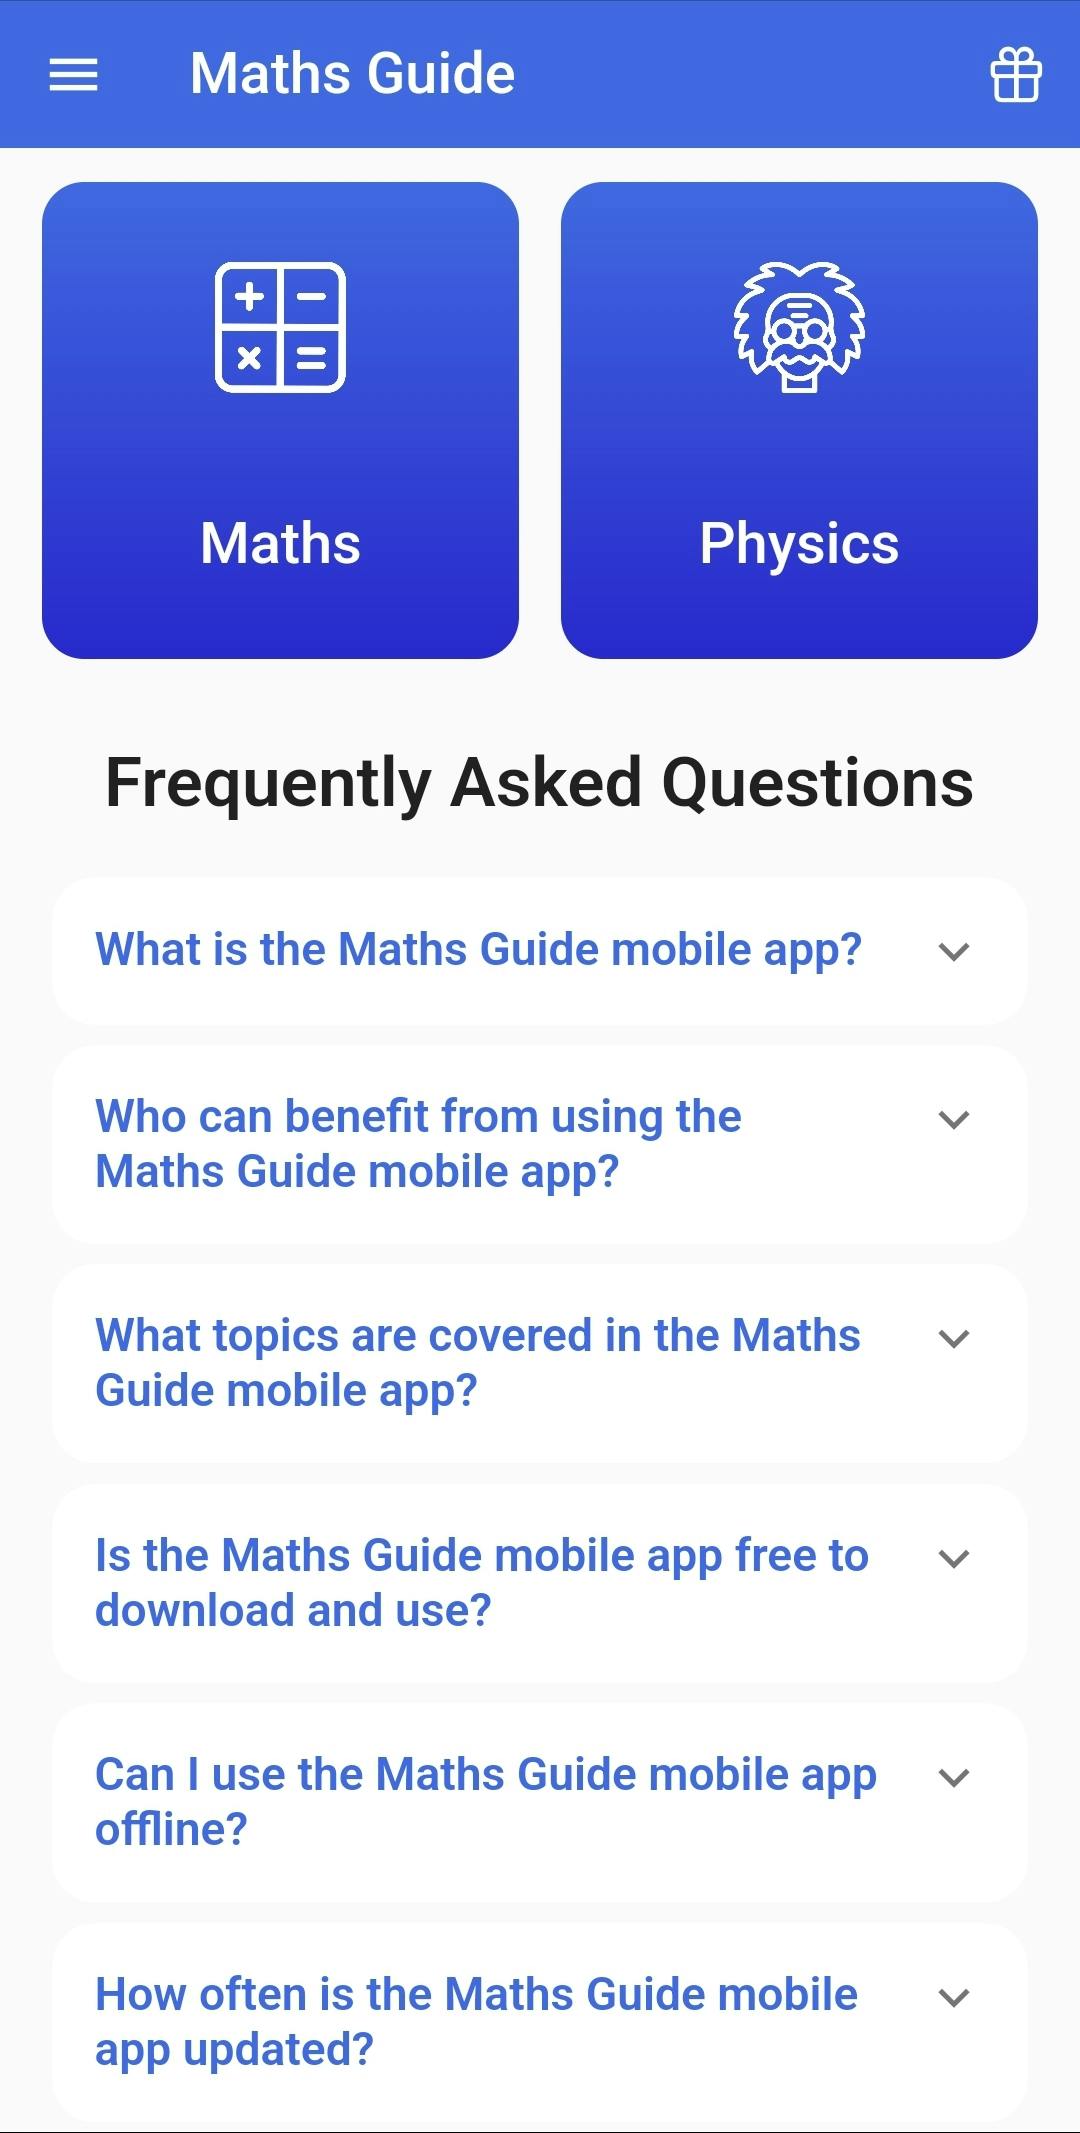 https://play.google.com/store/apps/details?id=com.dimaljay.maths_guide